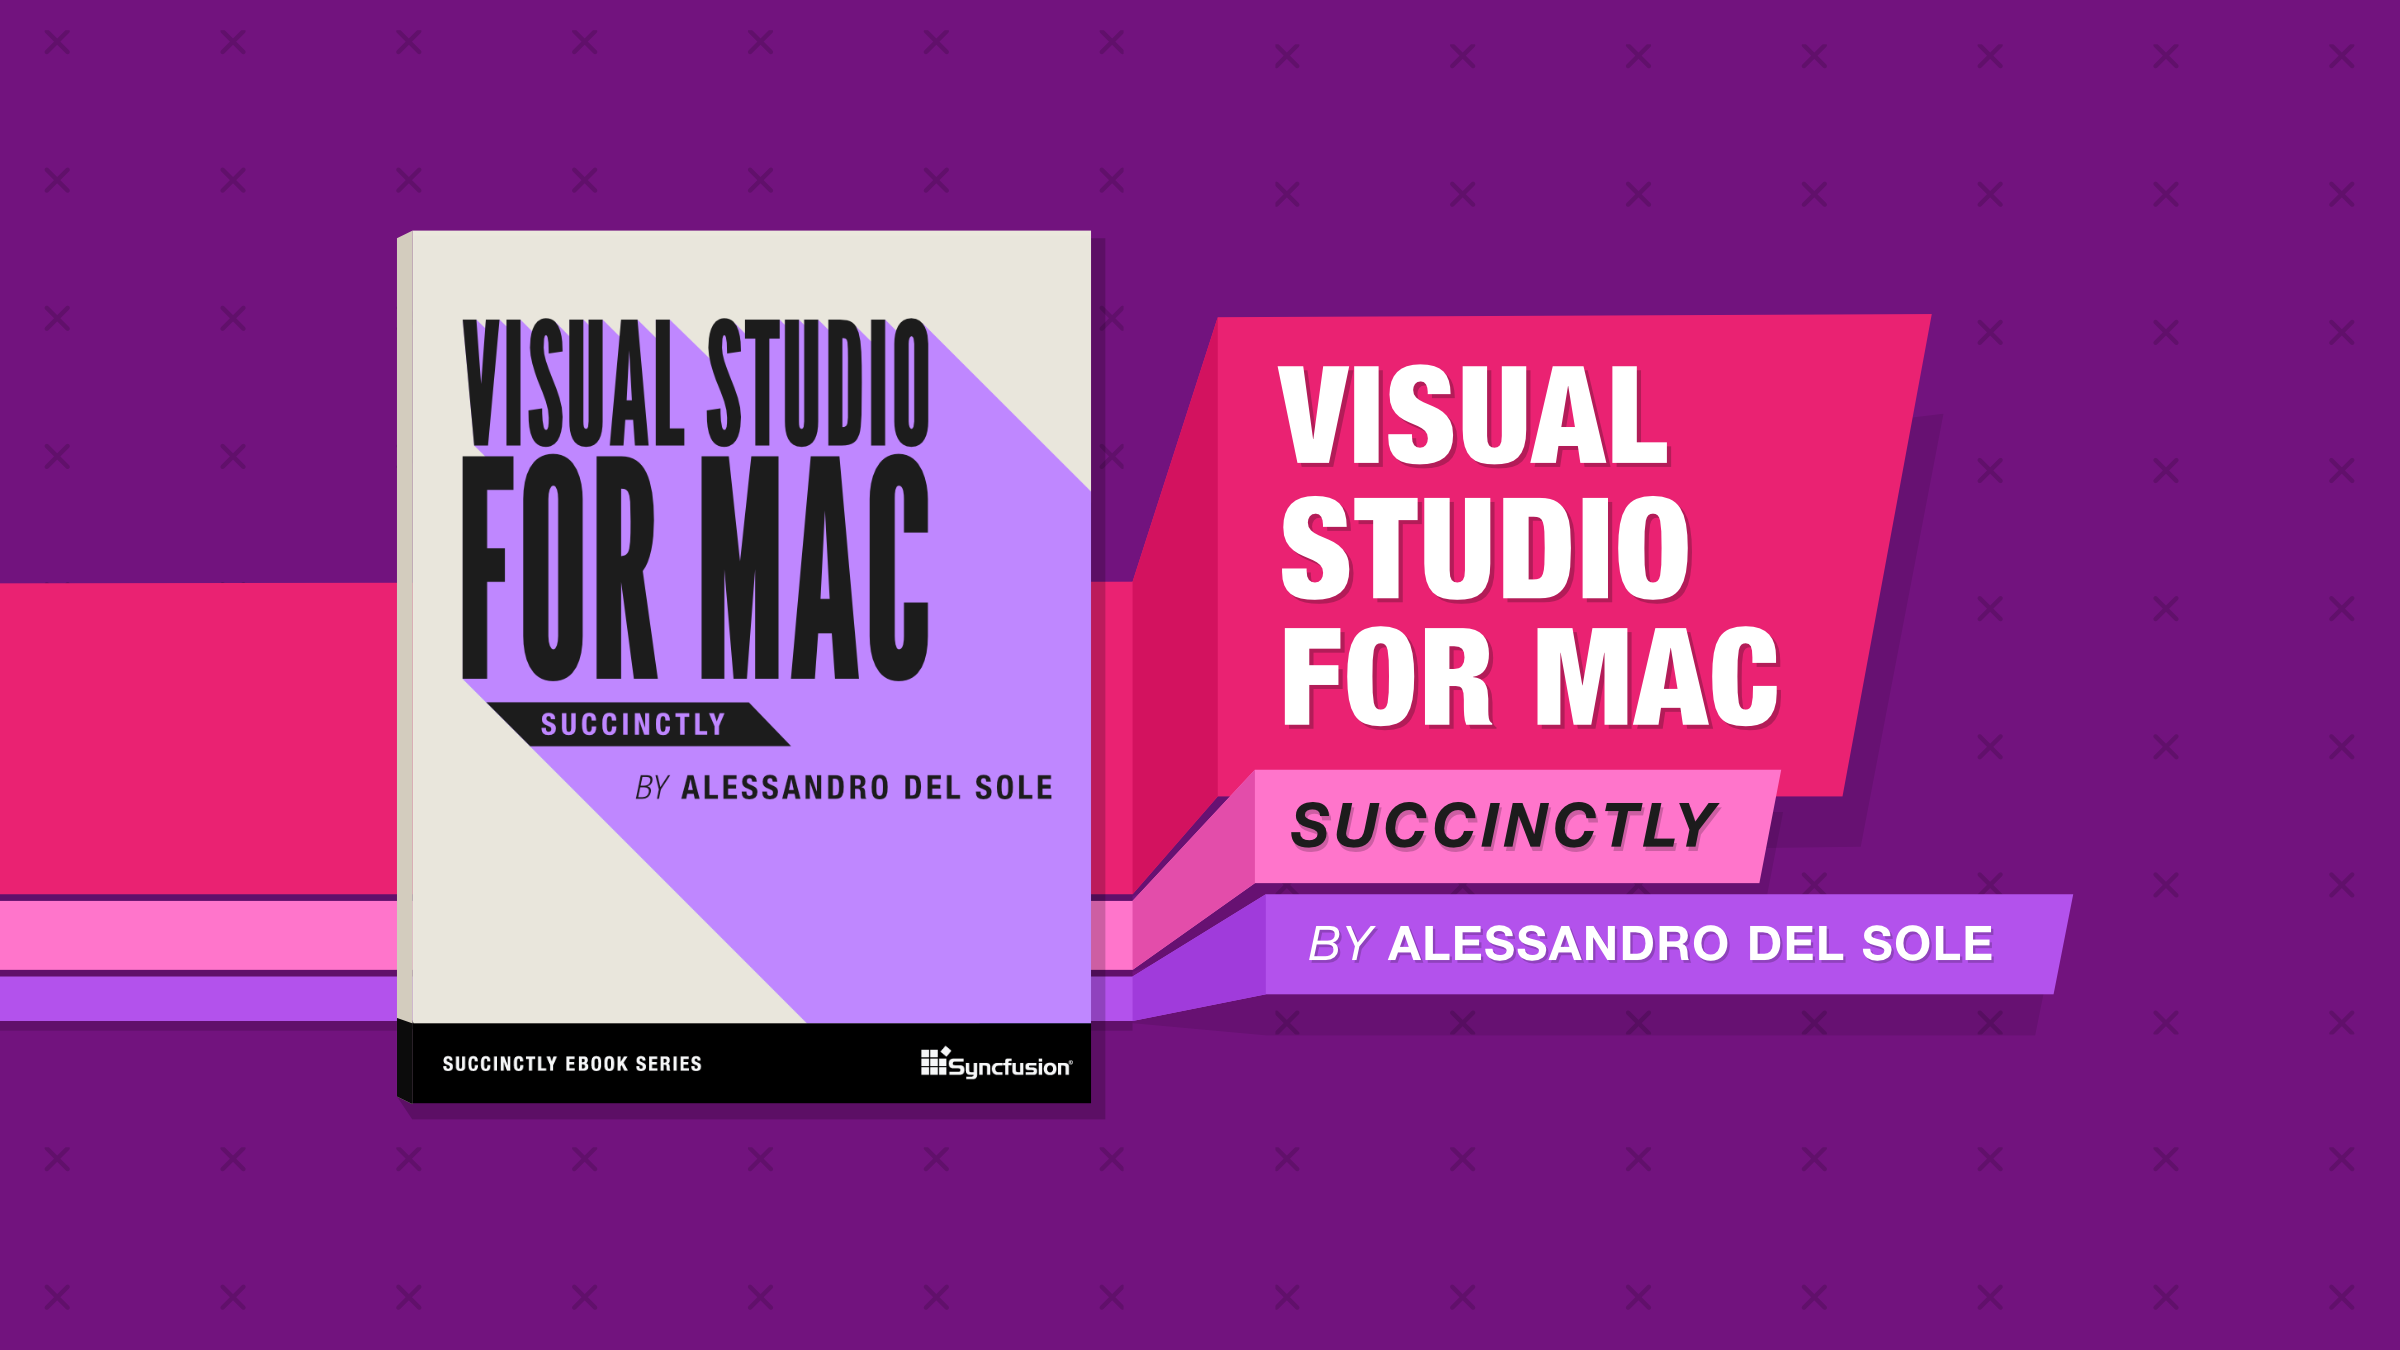 sjsu visual studio for mac